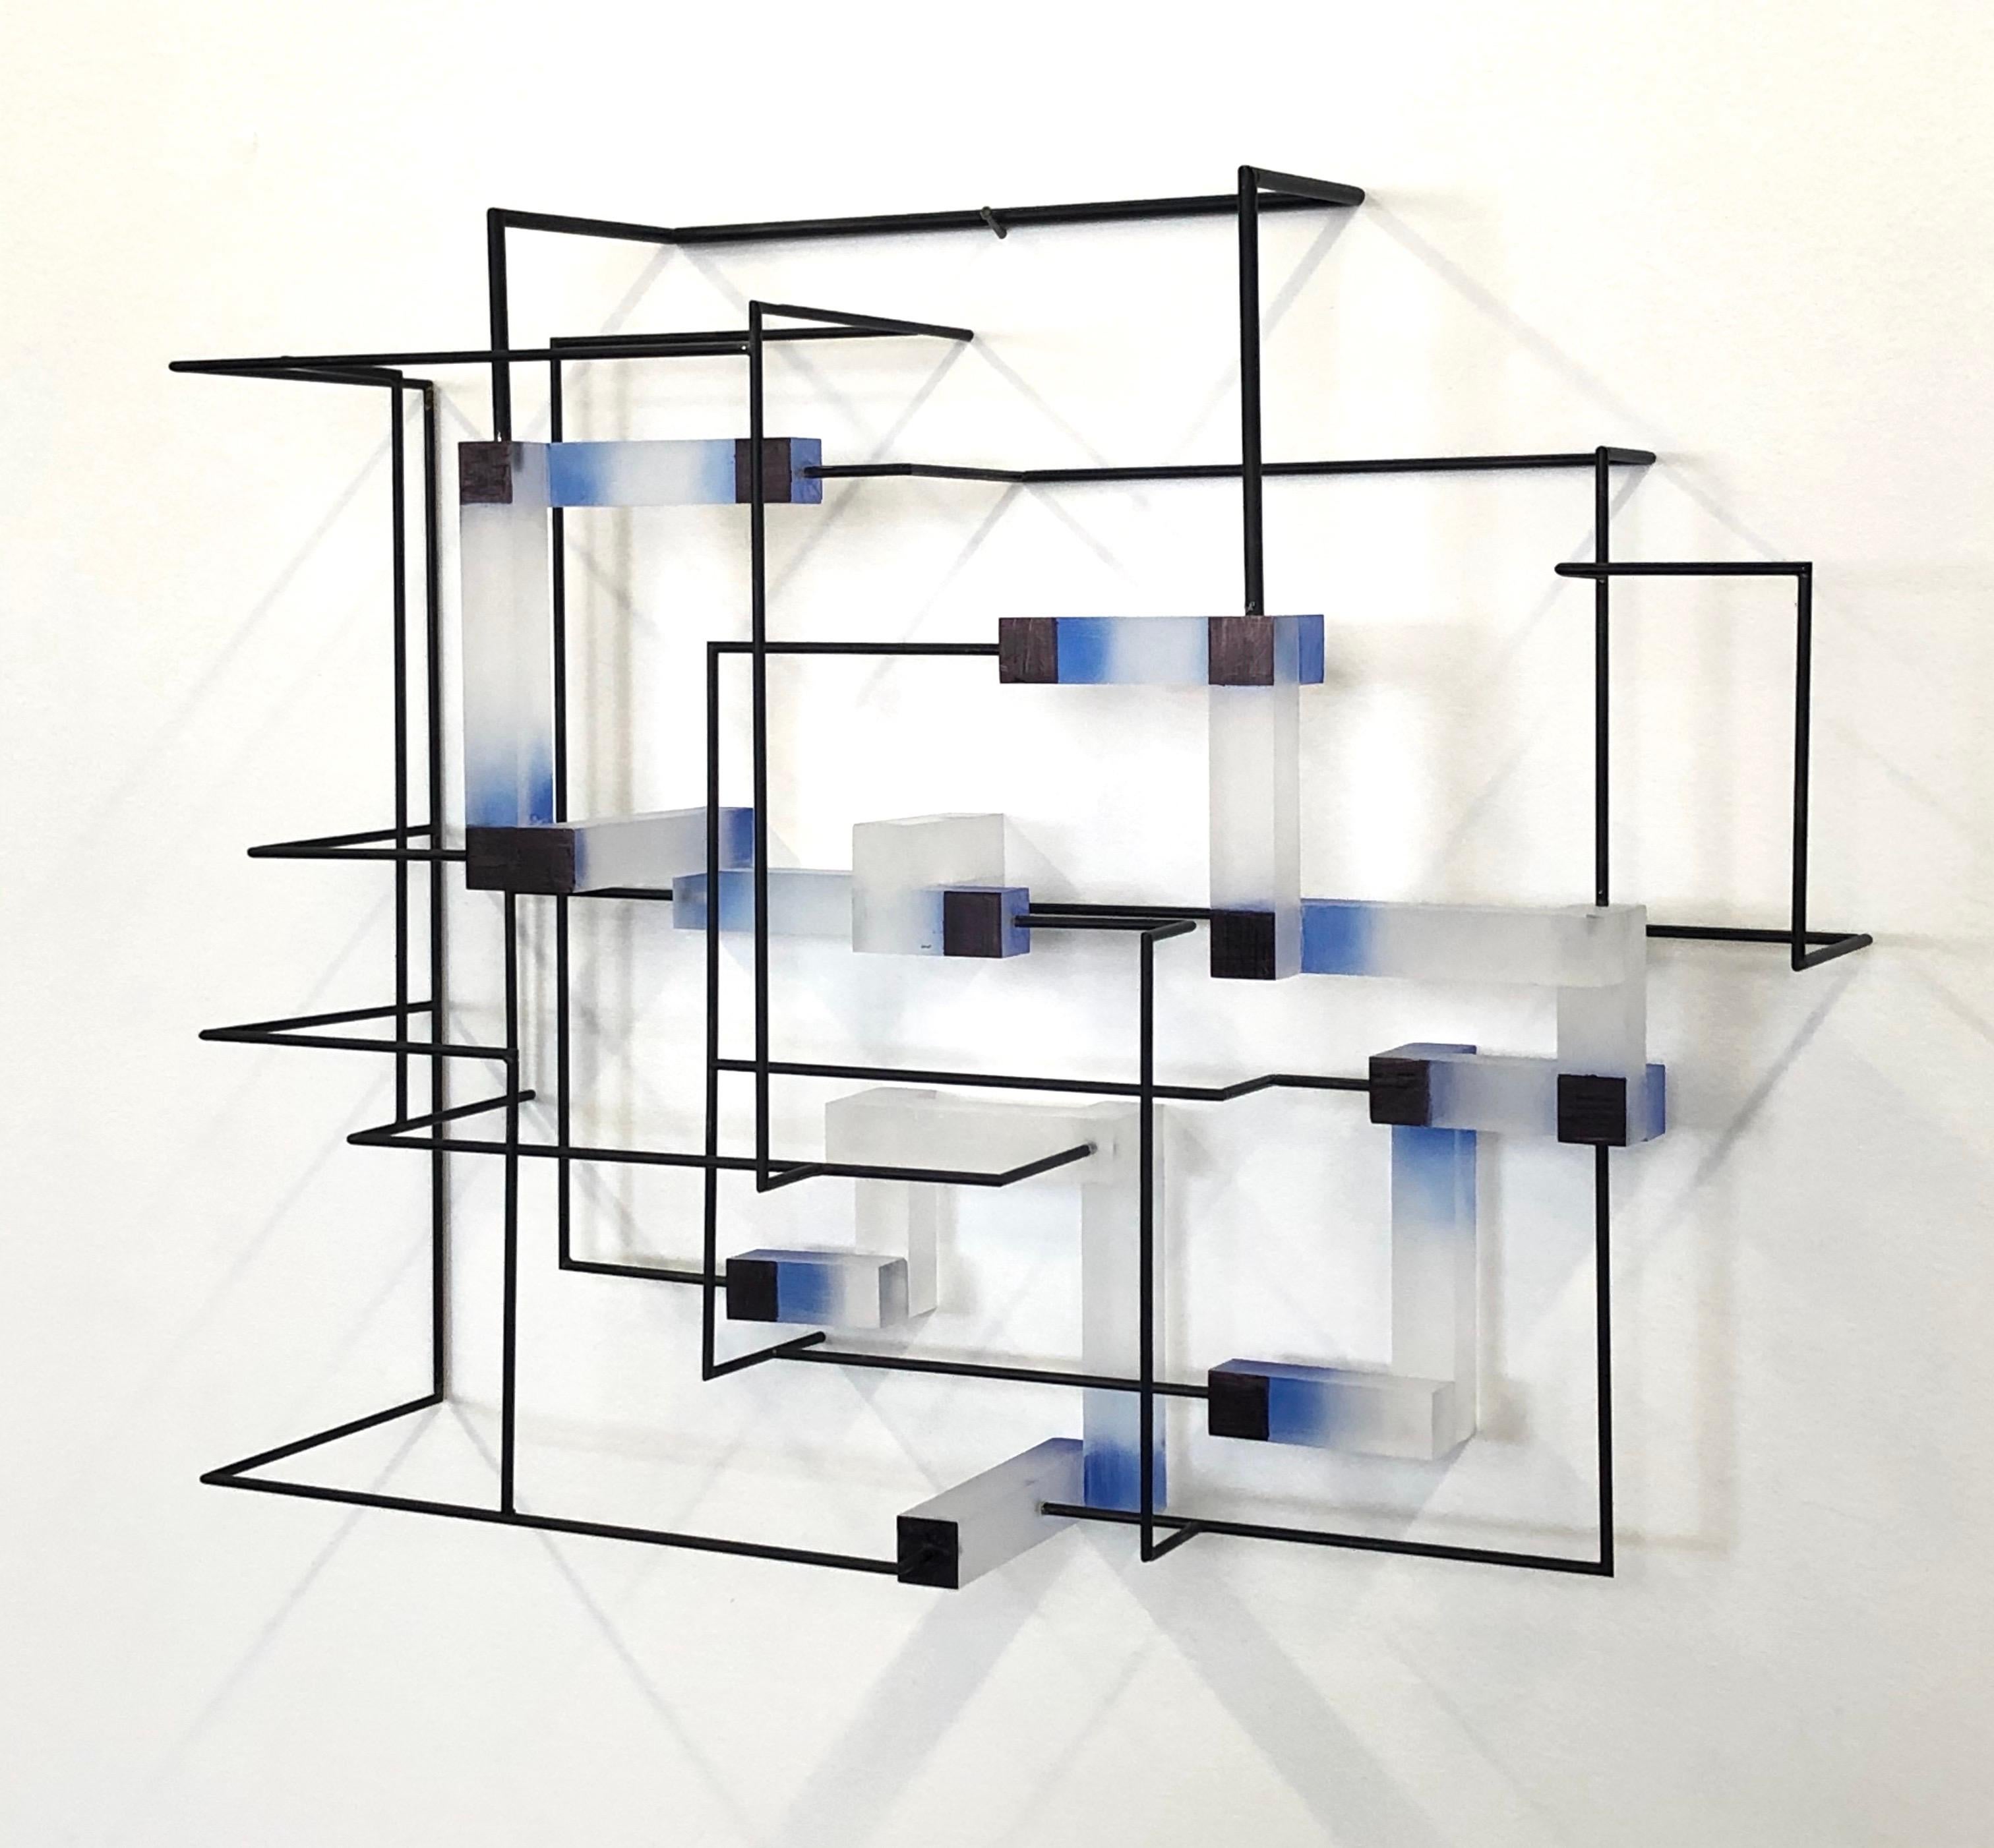 Transblue : contemporary modern abstract geometric sculpture - Sculpture by Greg Chann